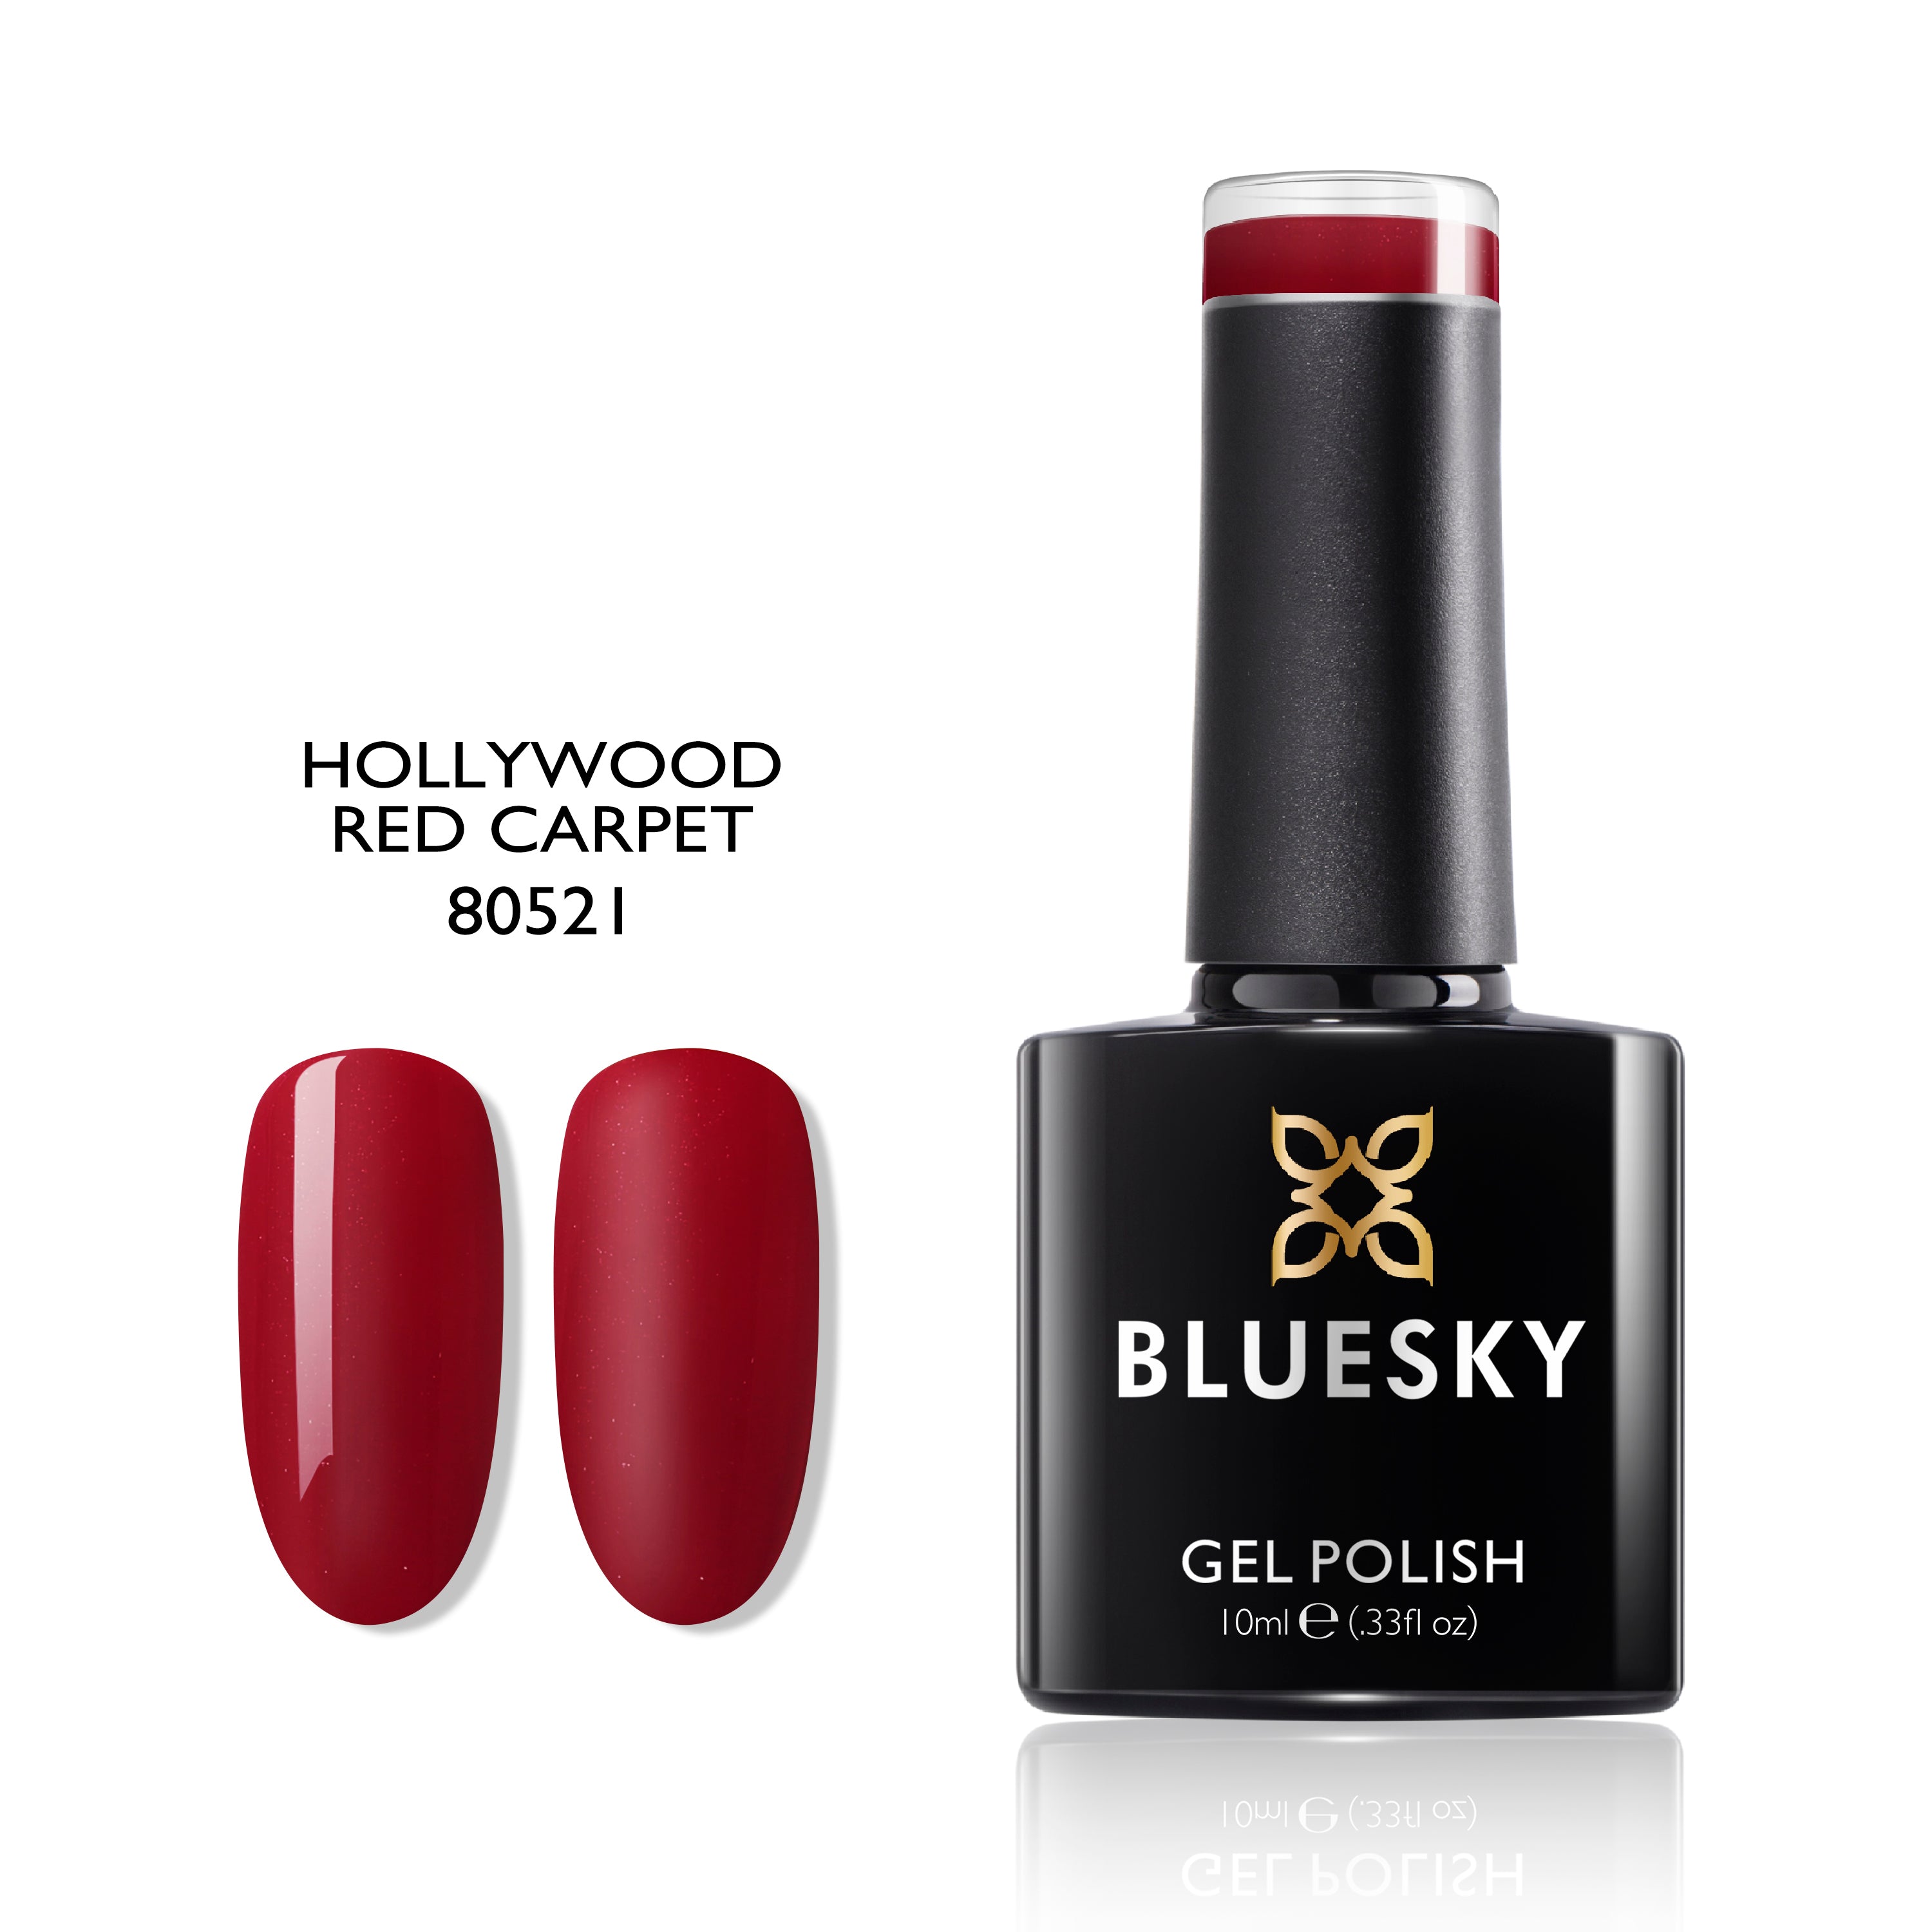 Hollywood Red Carpet | Classy Glitter Shimmer Color | 10ml Gel Polish - BLUESKY